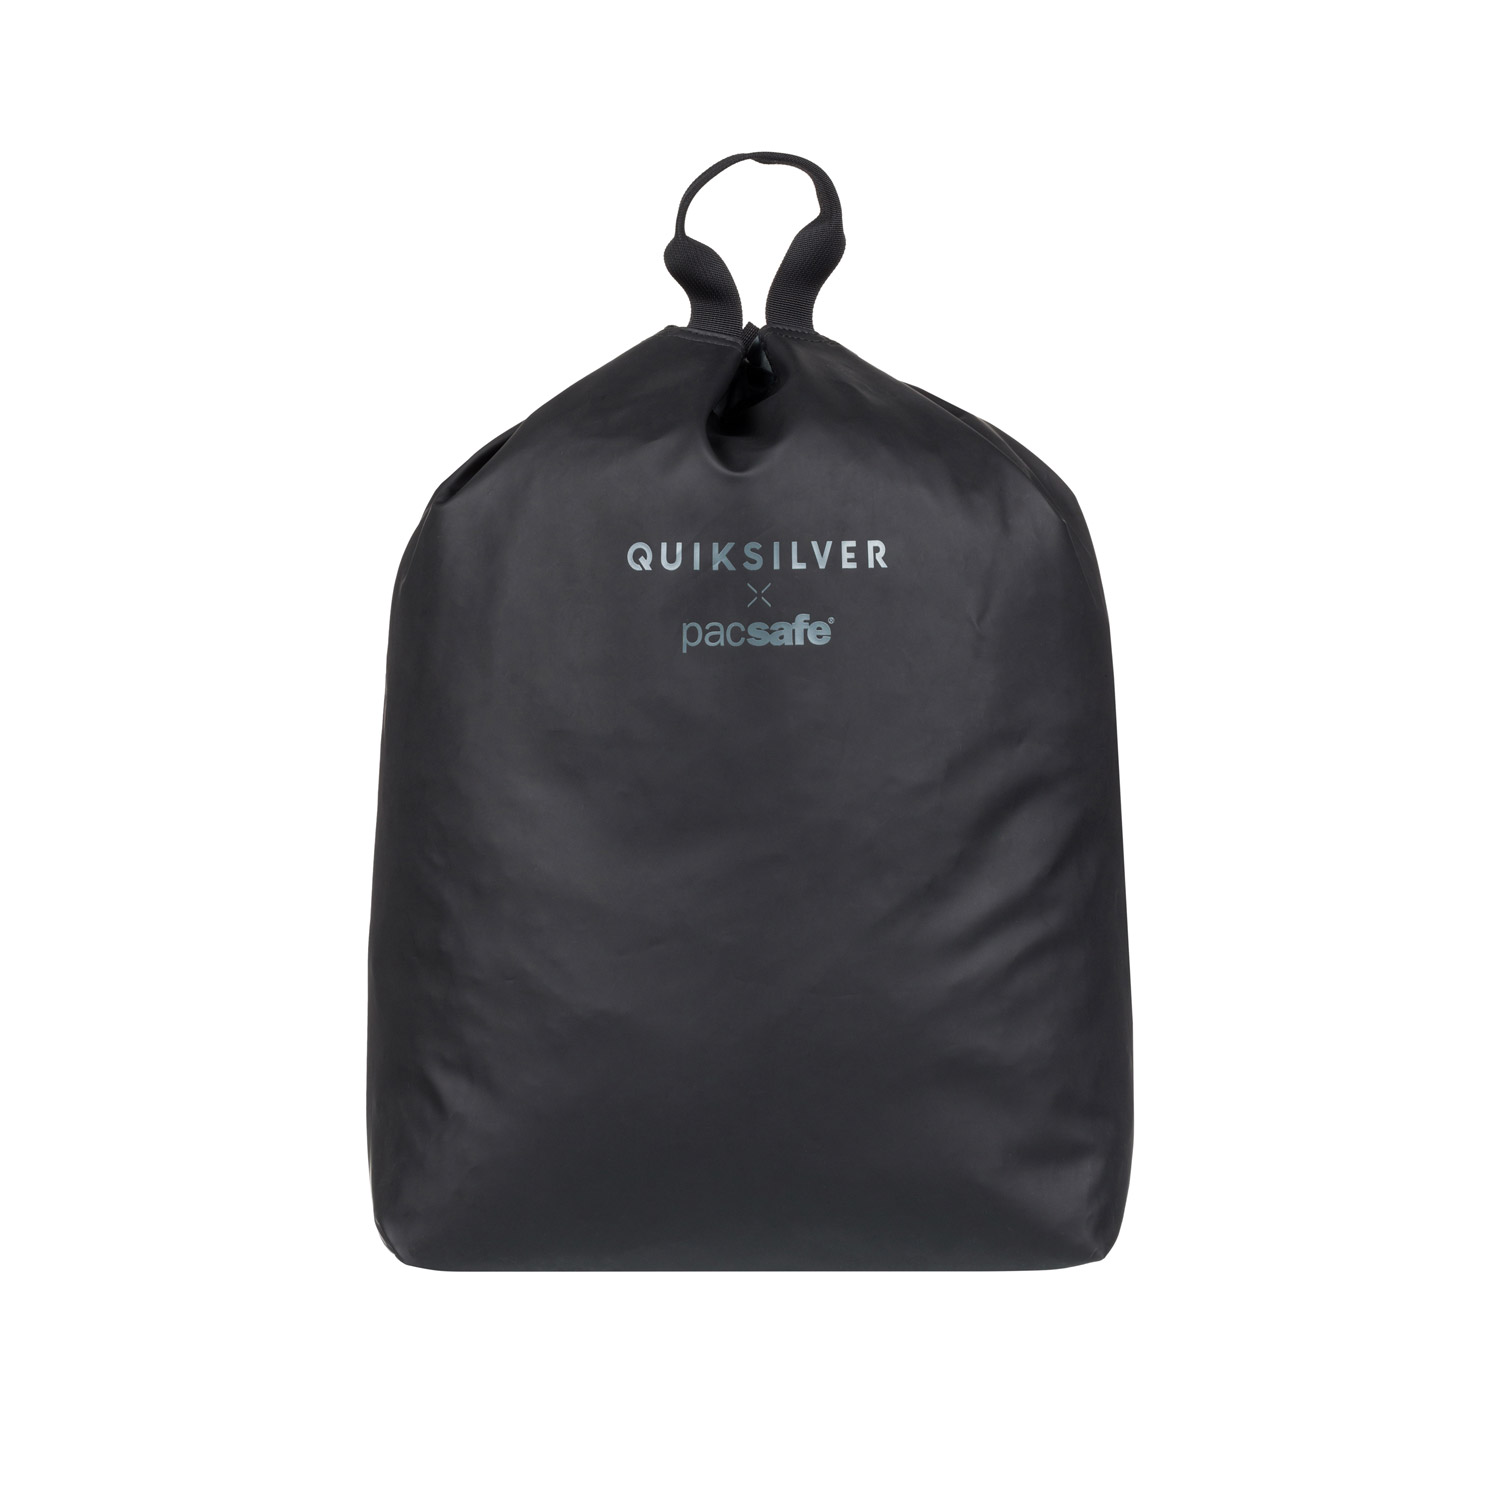 quicksilver-pacsafe-antitheft-bag-3